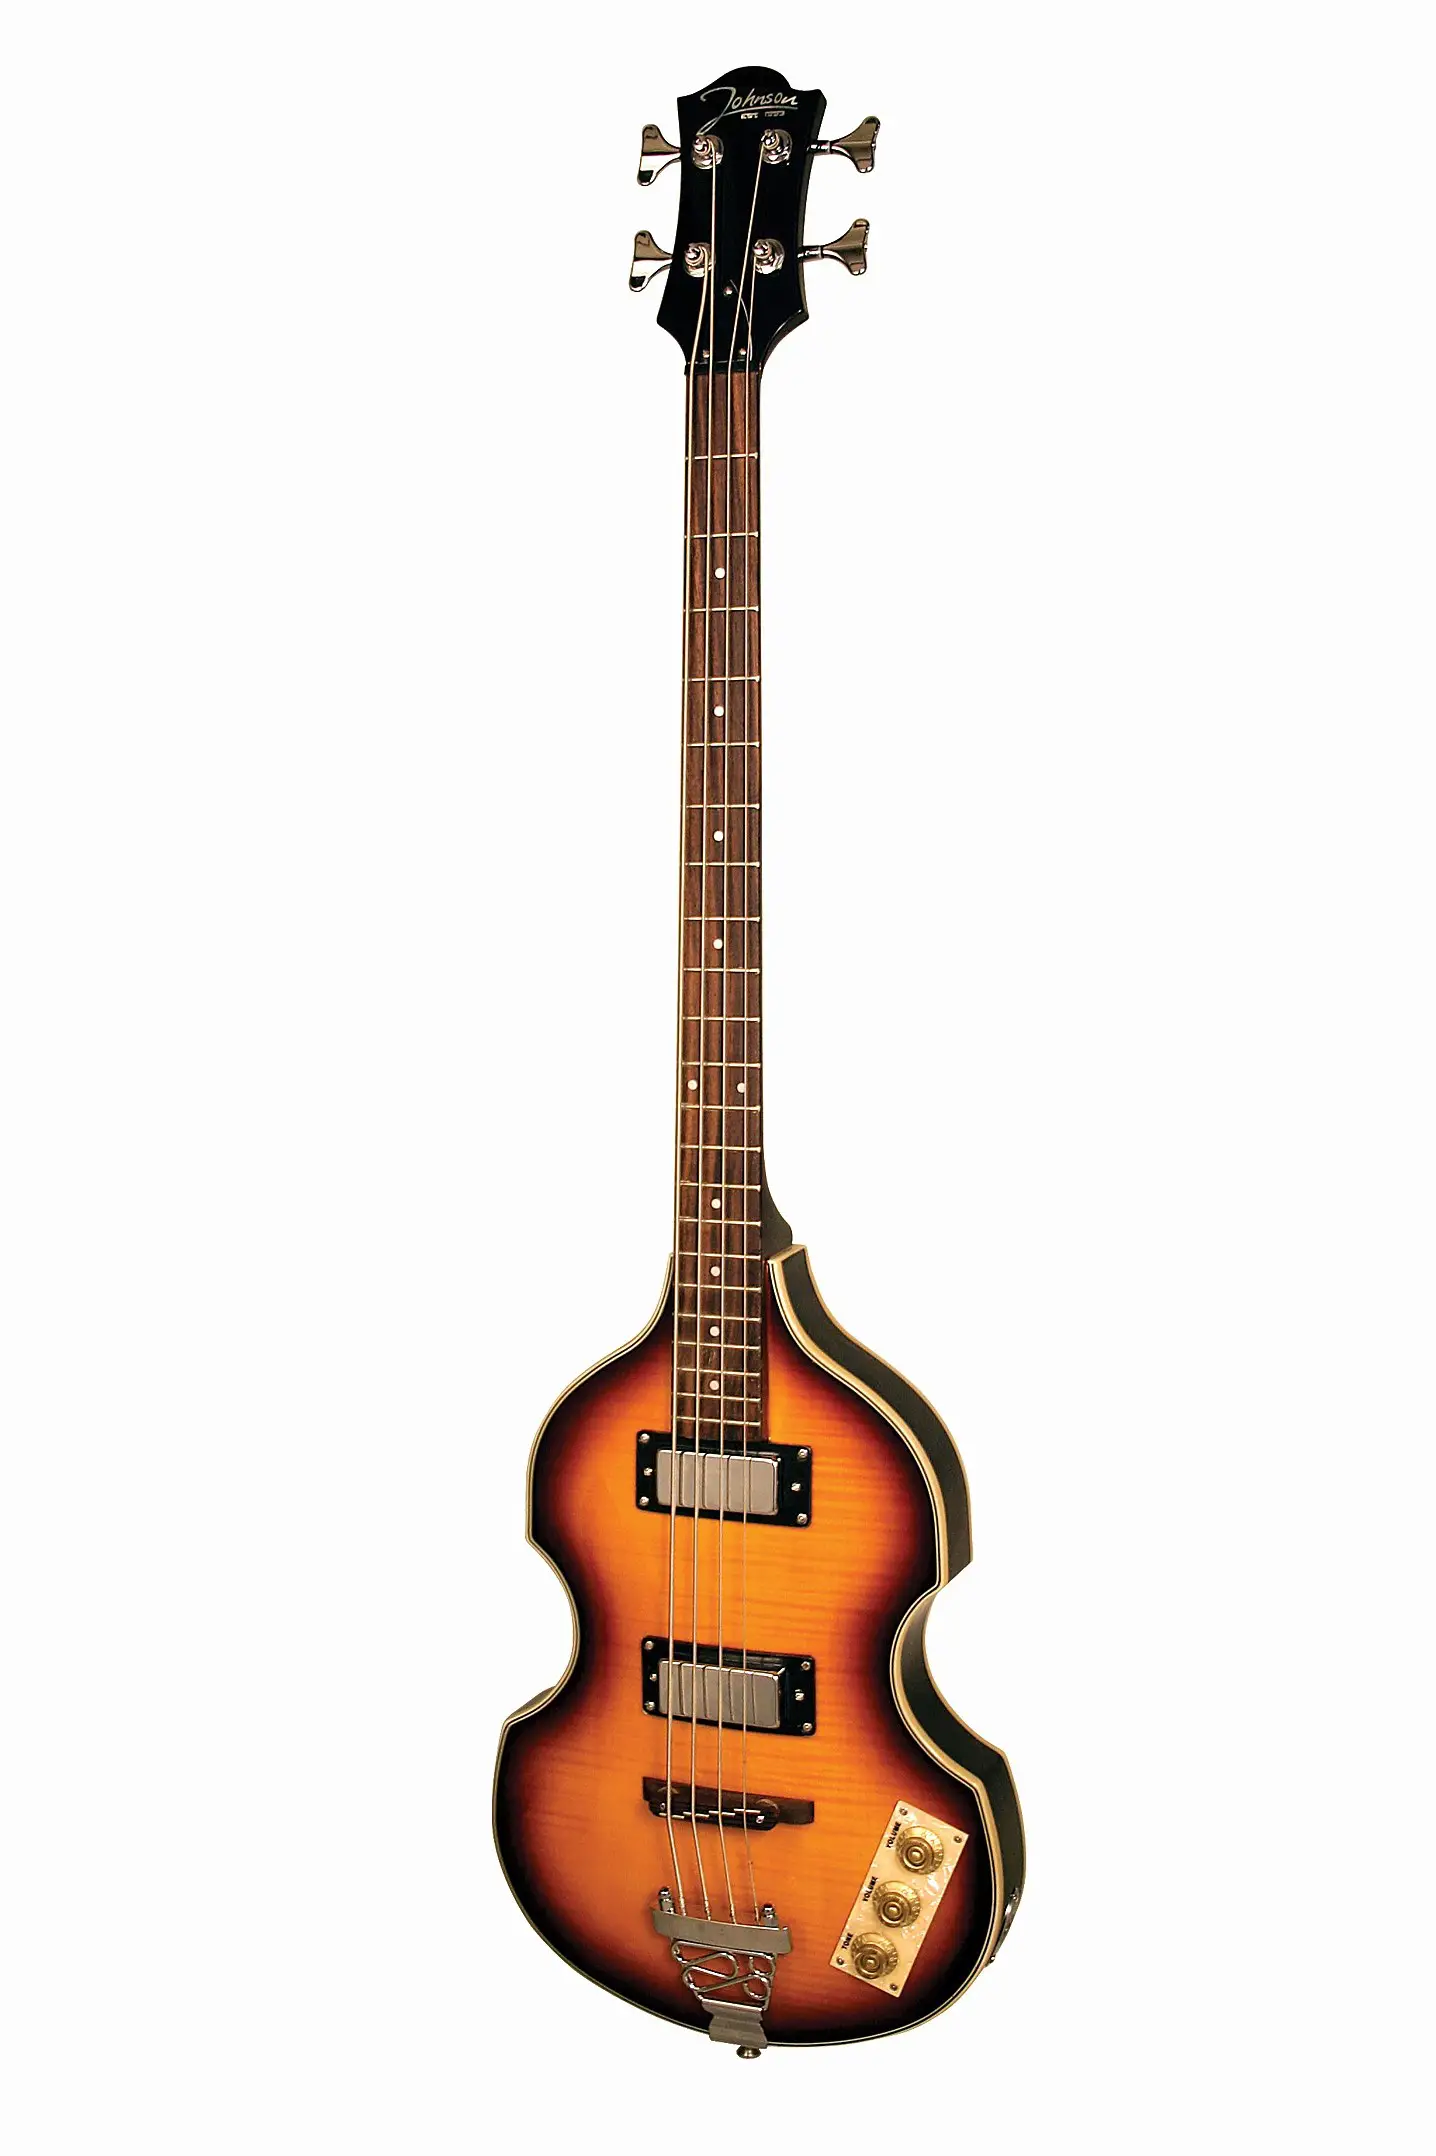 JJ-200 by Johnson Guitars